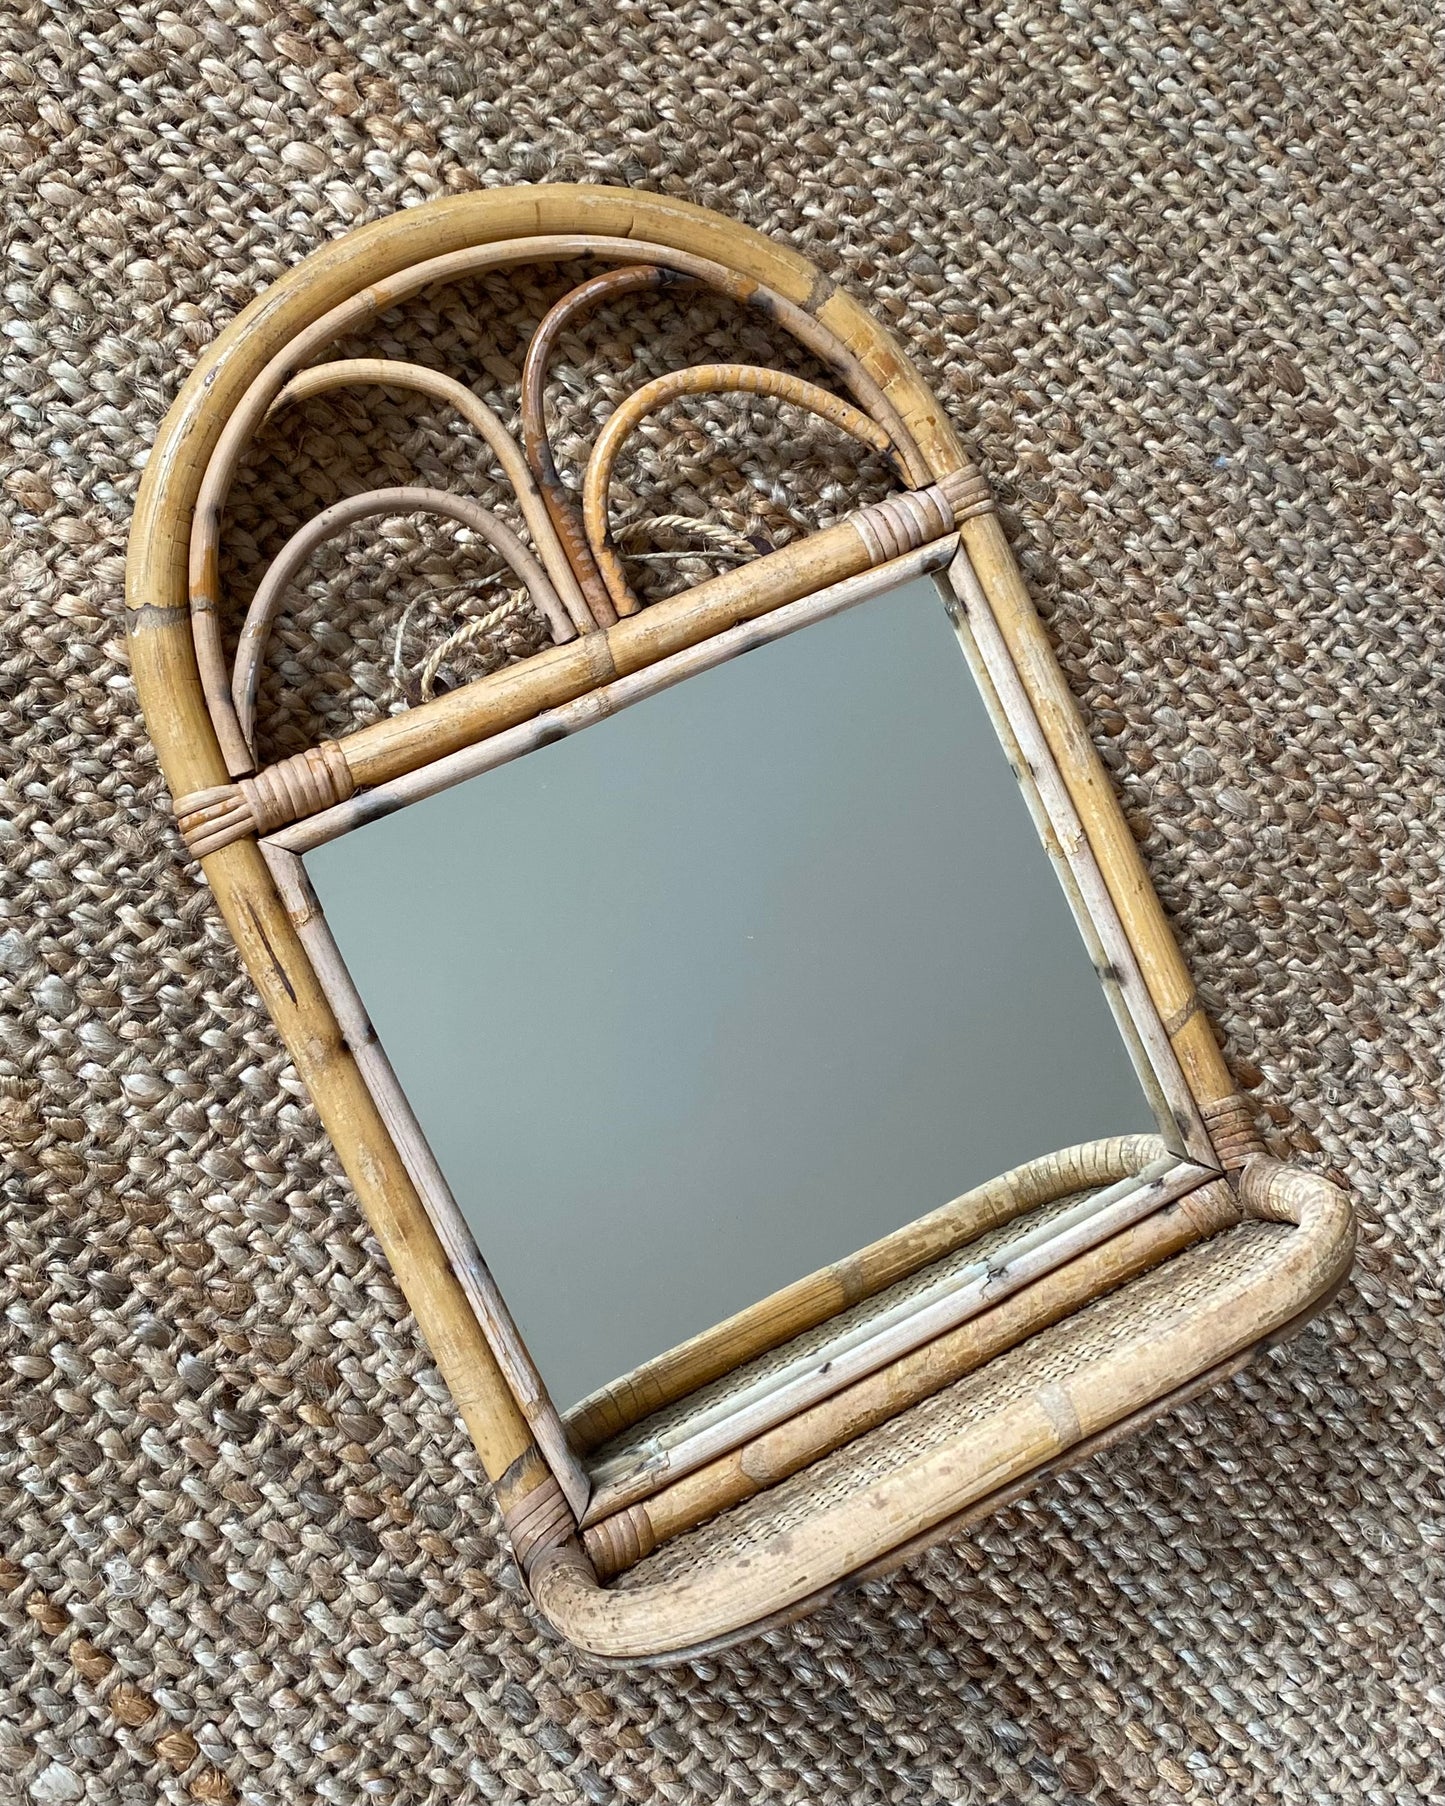 Vintage mirror with rattan shelf